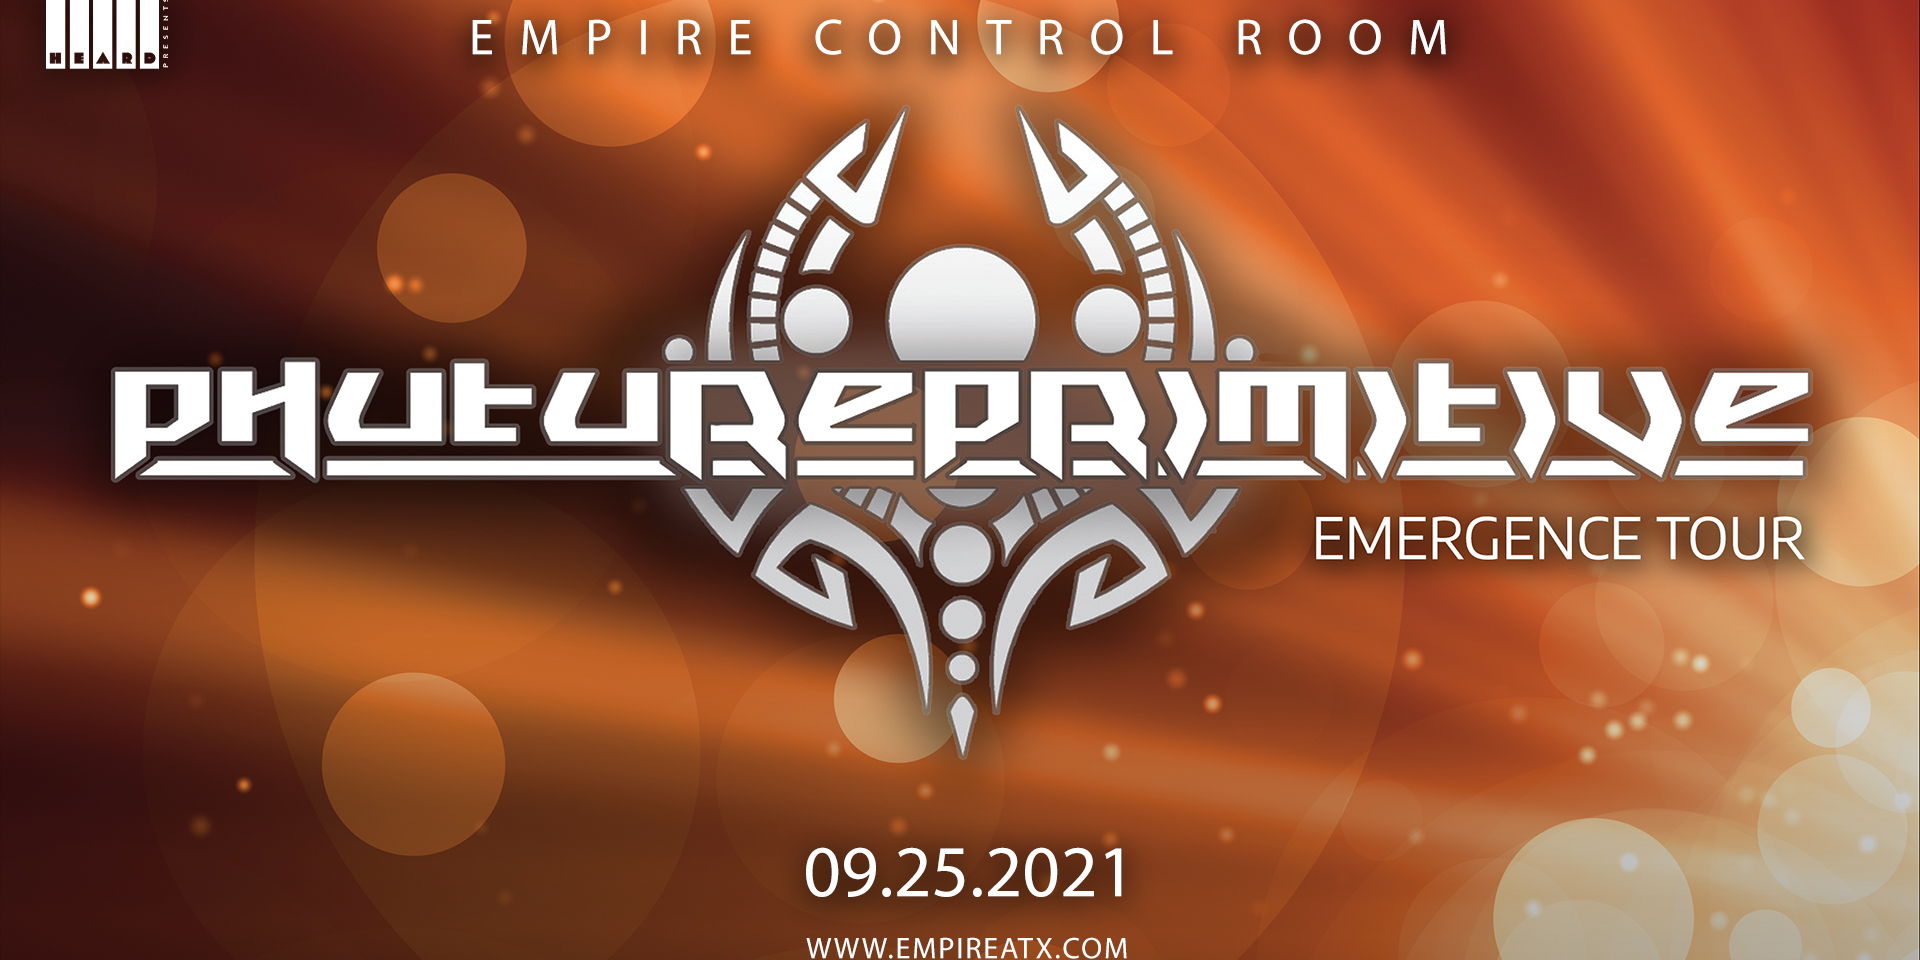 Phutureprimitive - Emergence Tour at Empire Control Room 9/25 promotional image